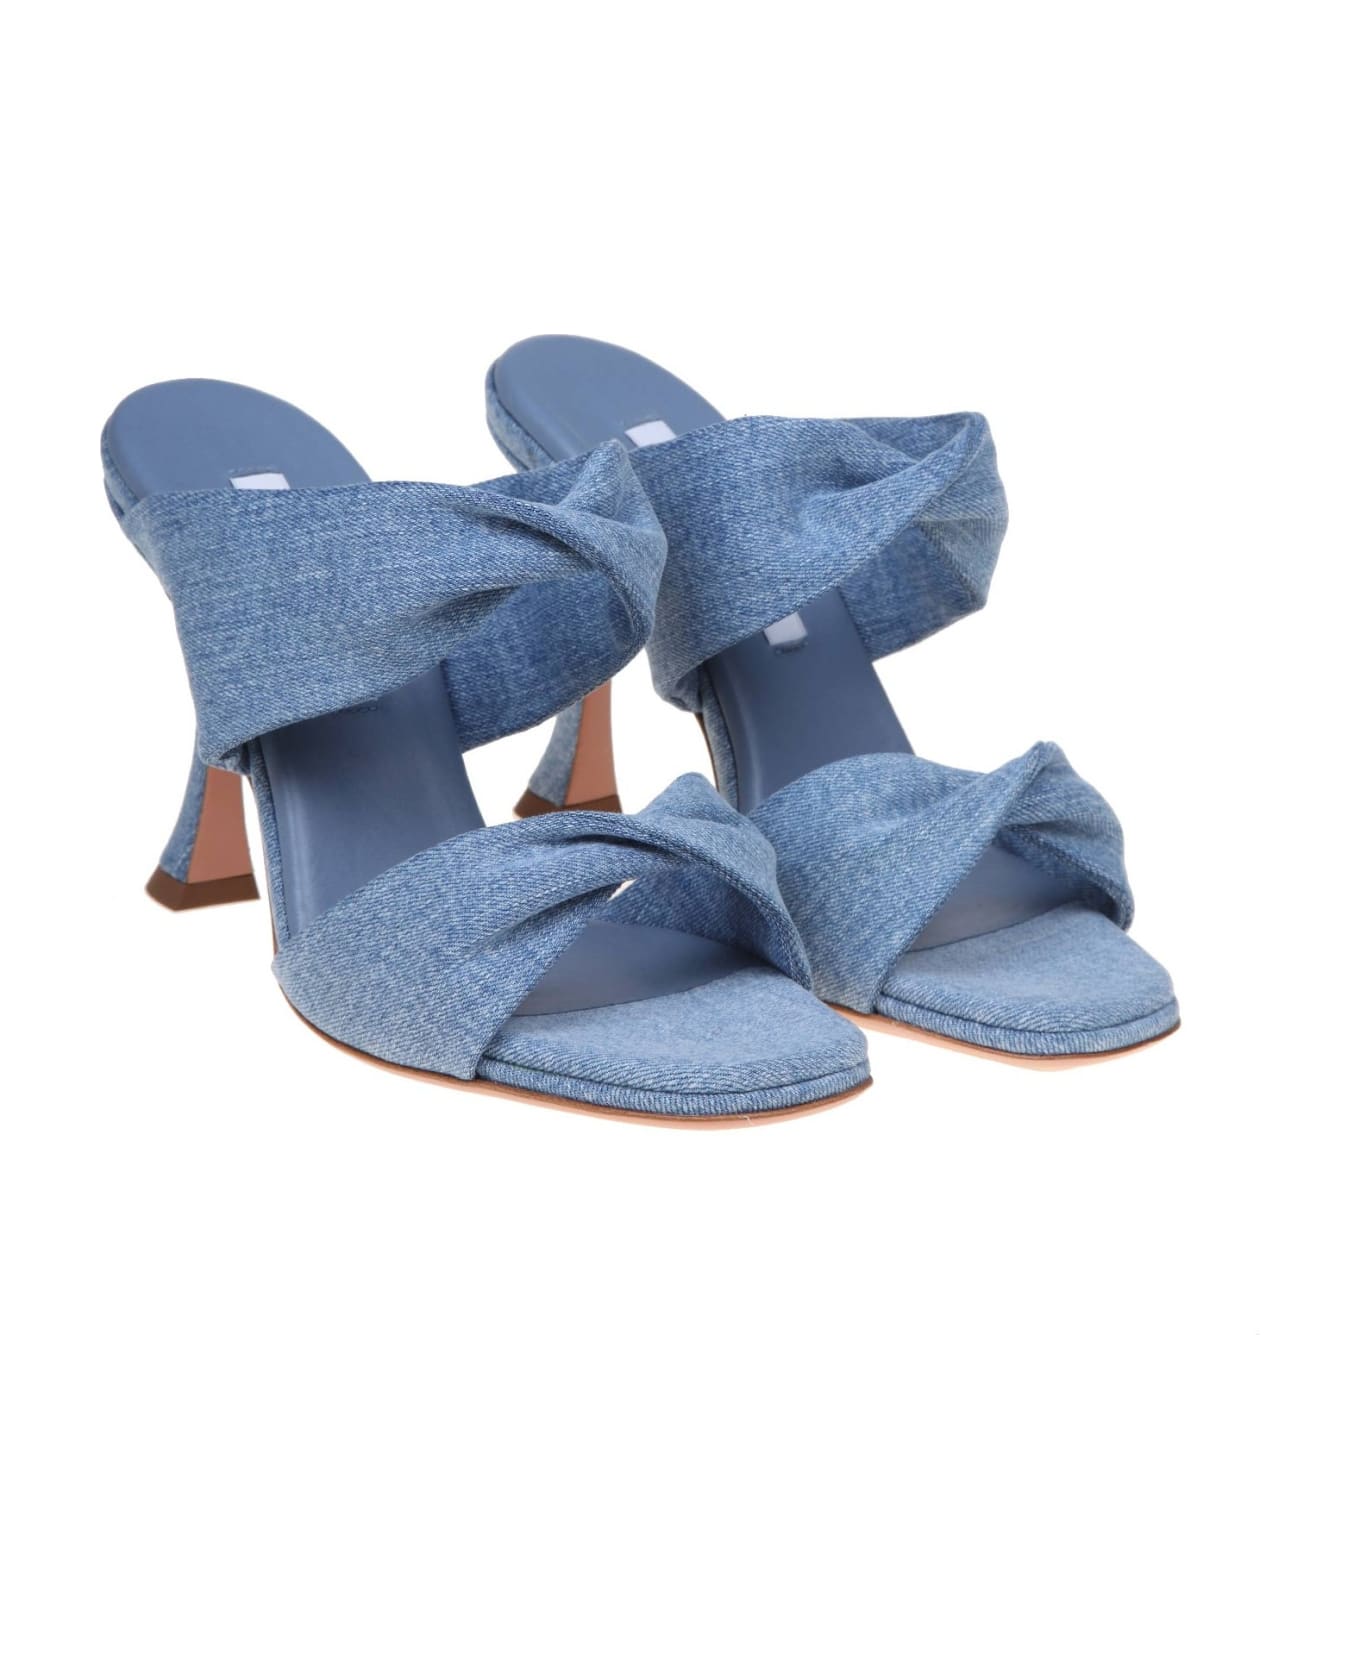 Aquazzura Twist 95 Sandal In Denim Fabric - Light blue サンダル